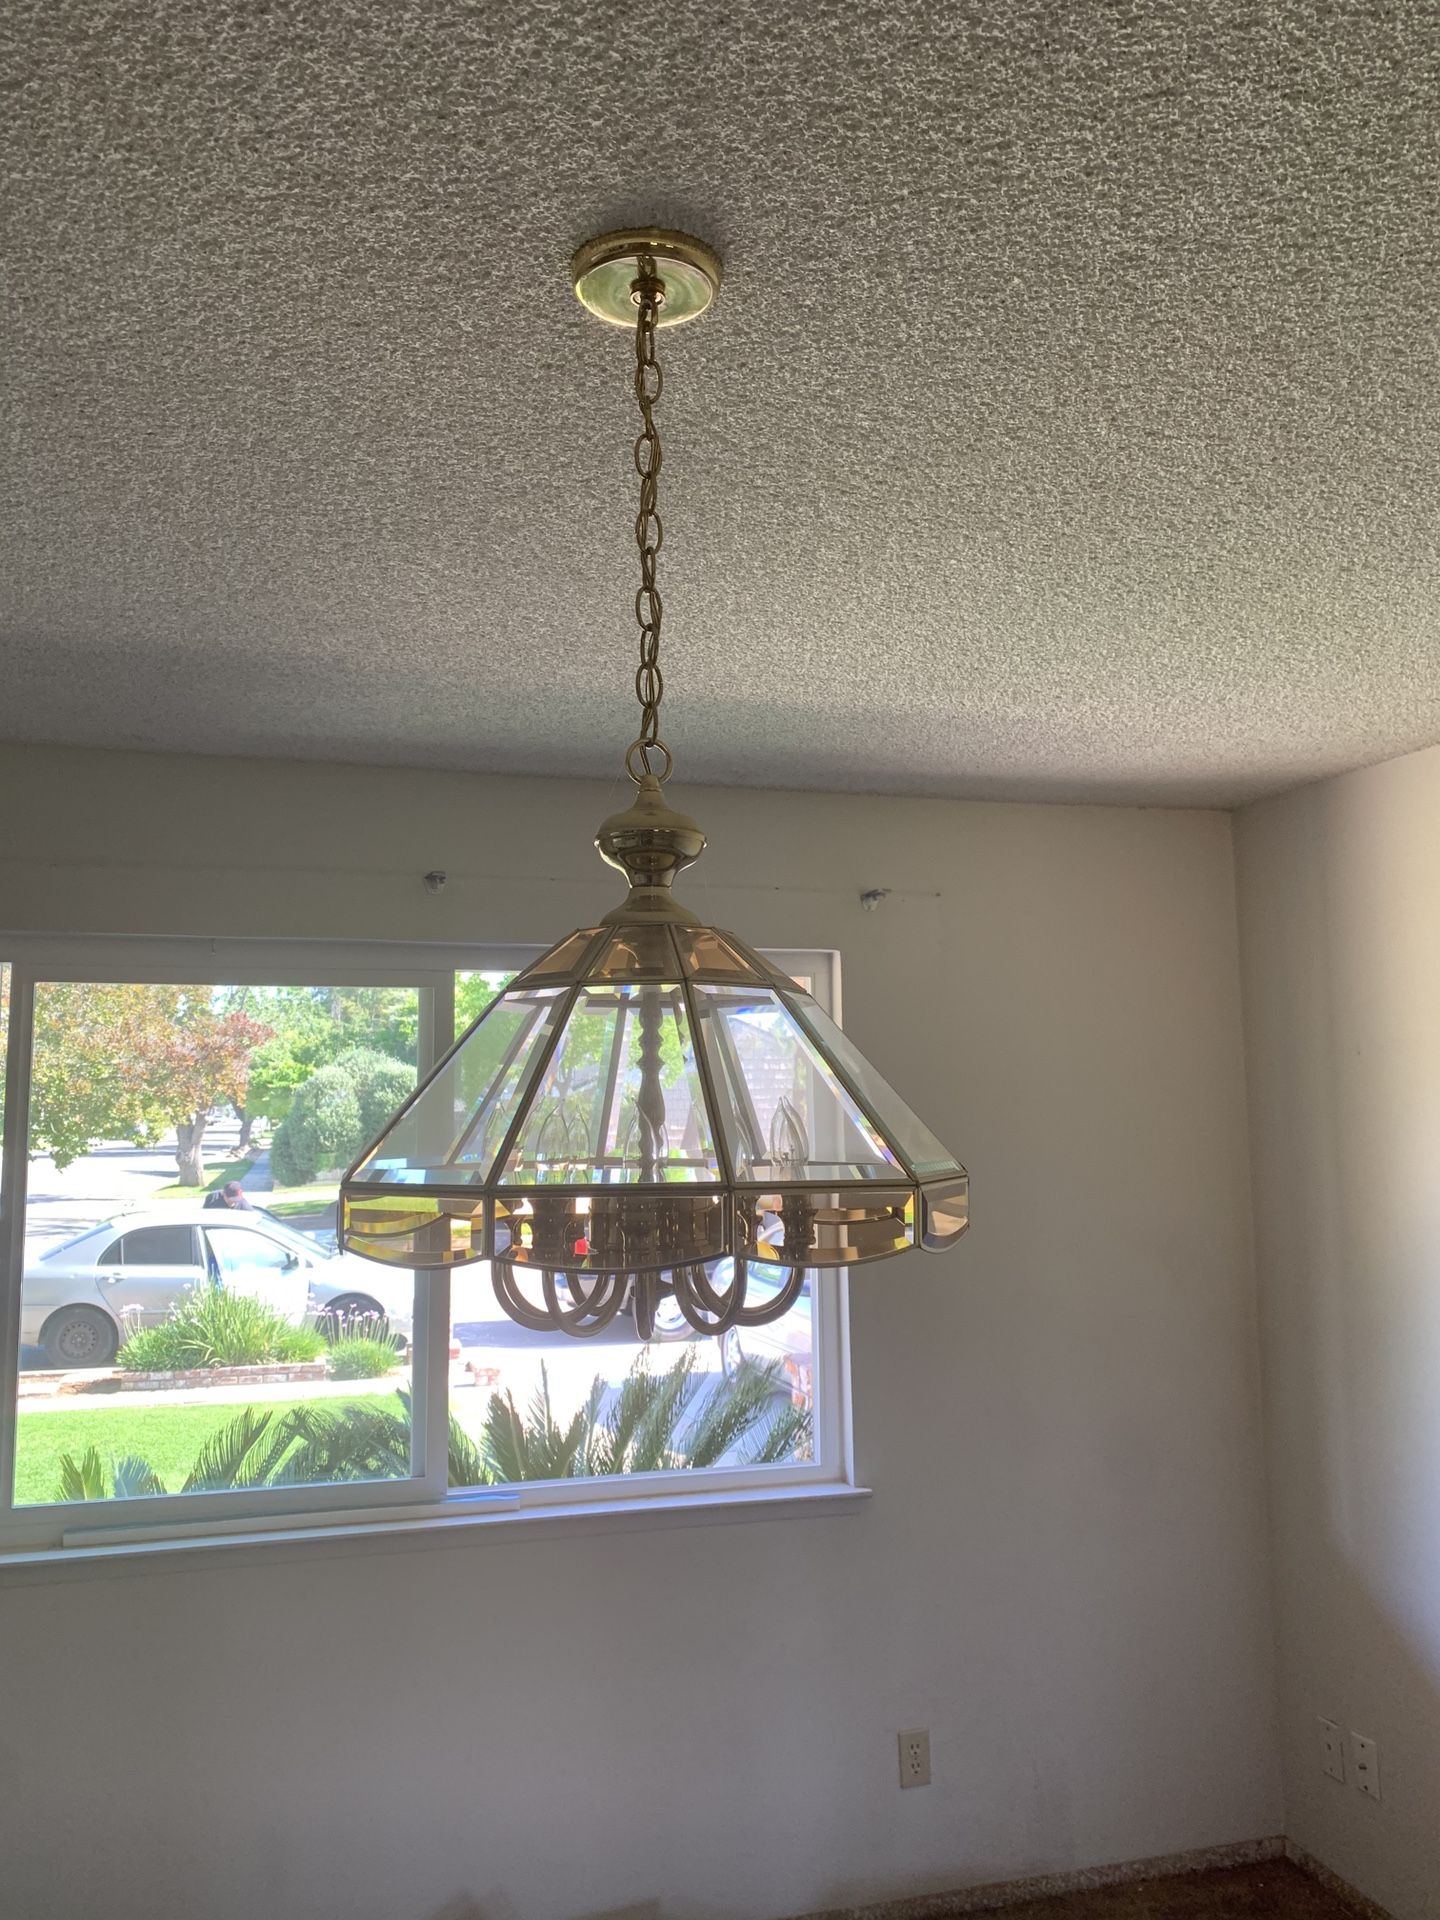 Beautiful light fixture chandelier - works great!